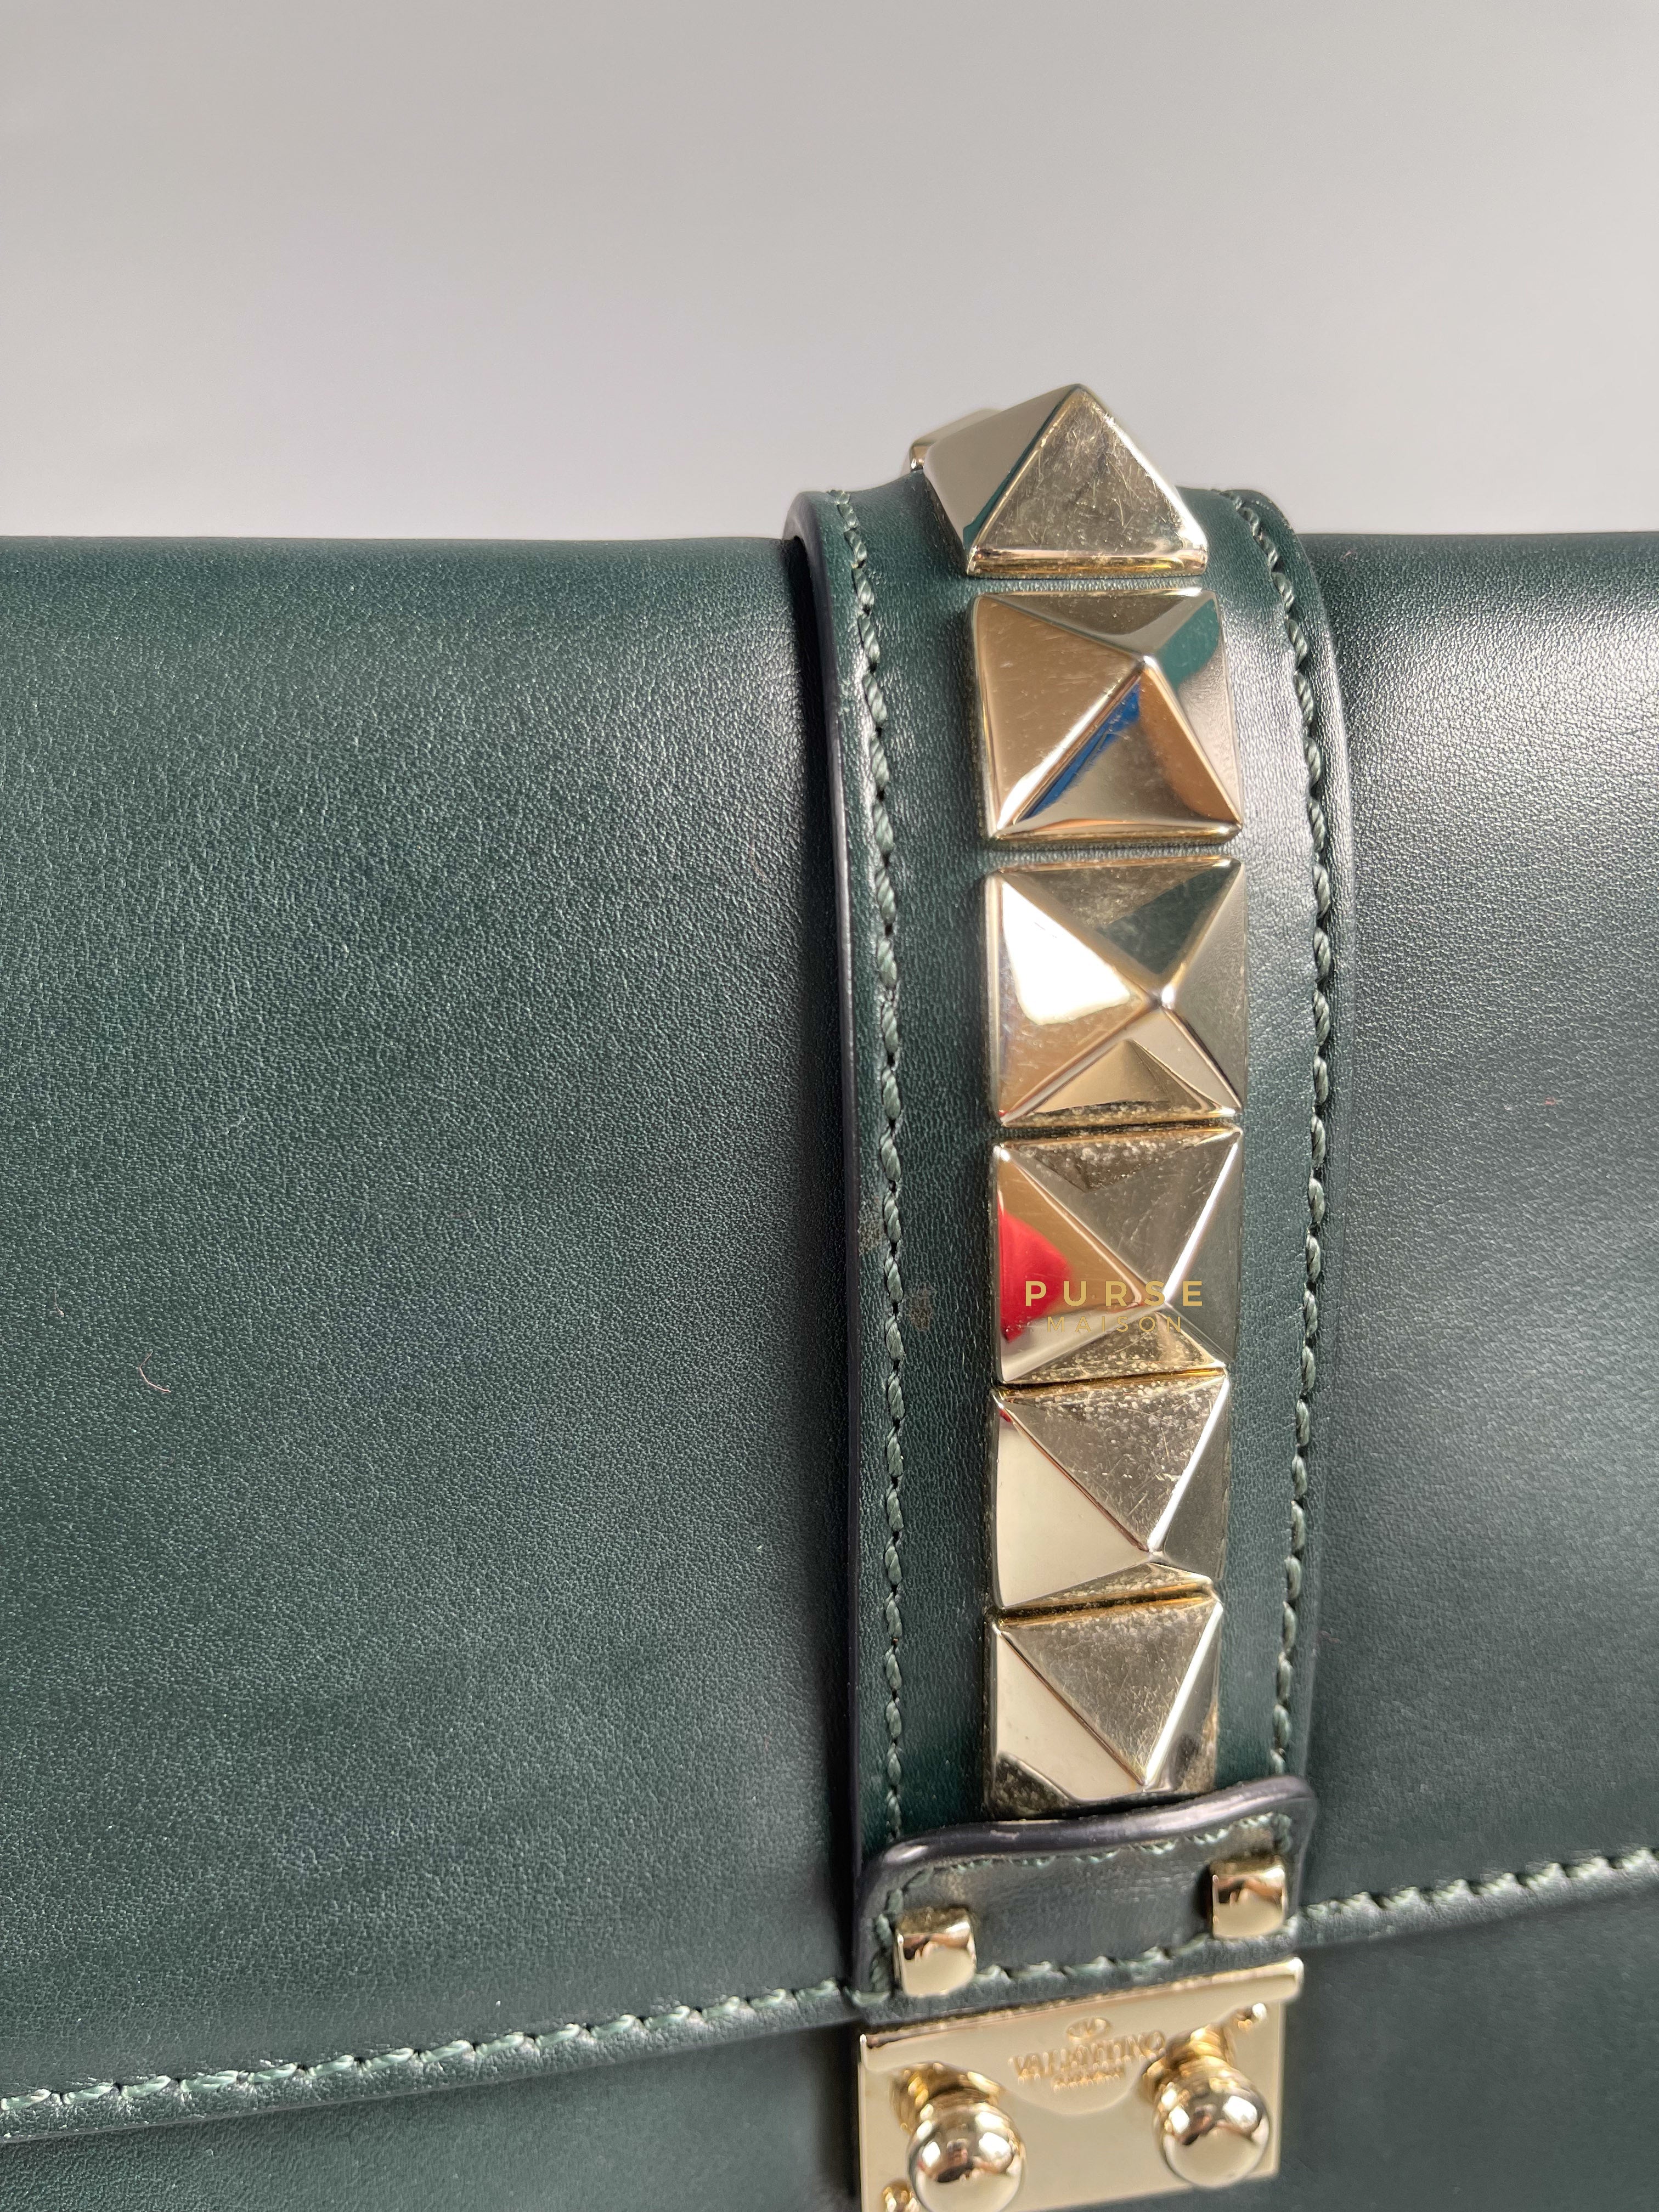 Valentino Garavani Glam Lock Flap in Medium Forest Green Leather | Purse Maison Luxury Bags Shop